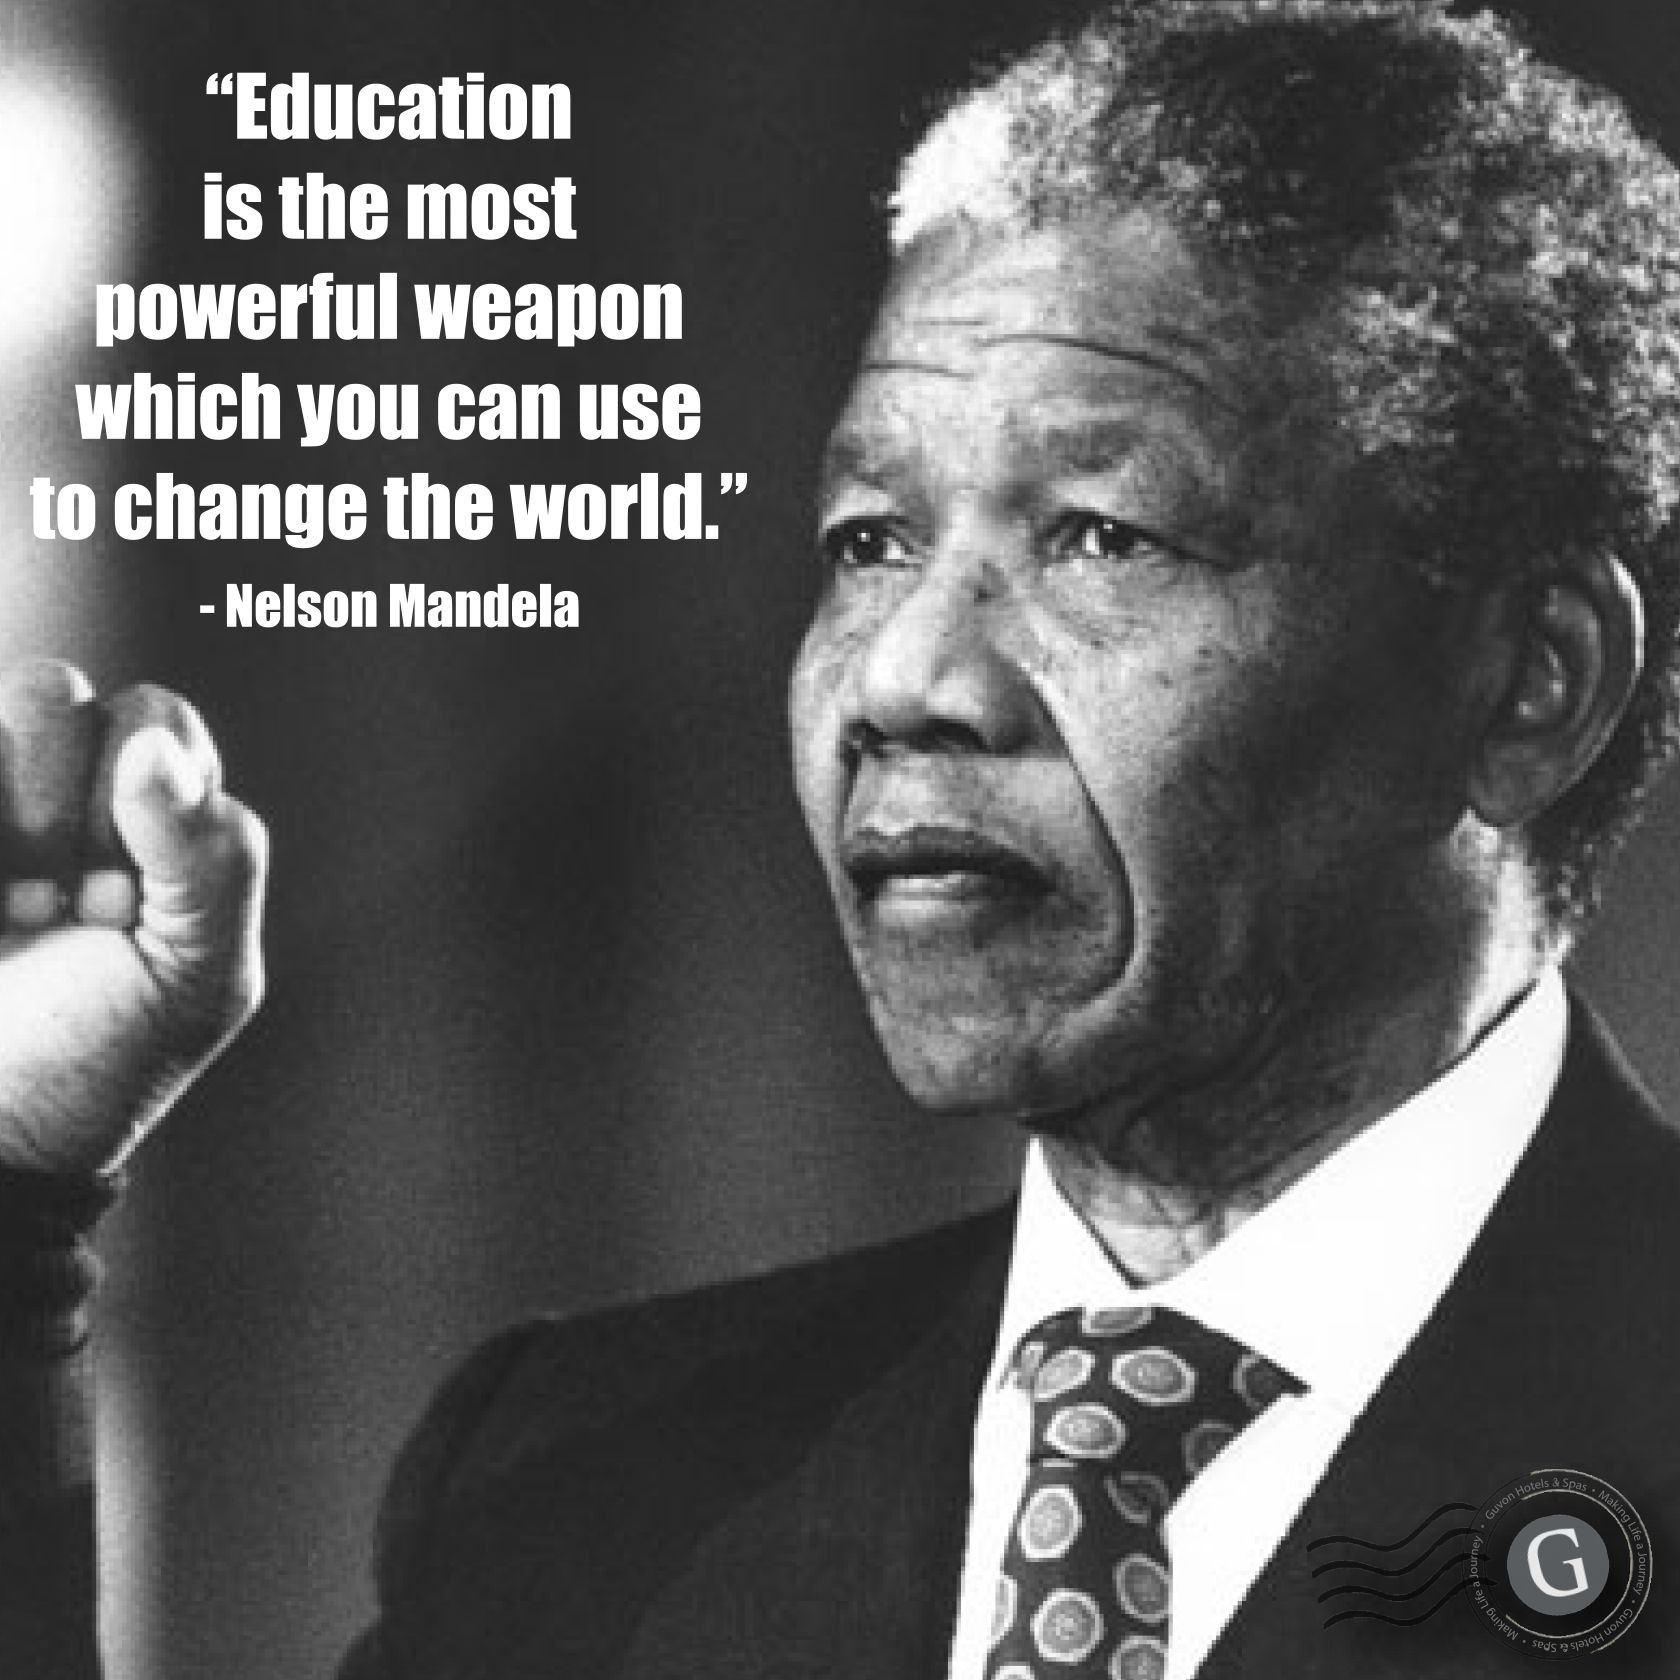 Mandela Education Quote
 Nelson Mandela Quote